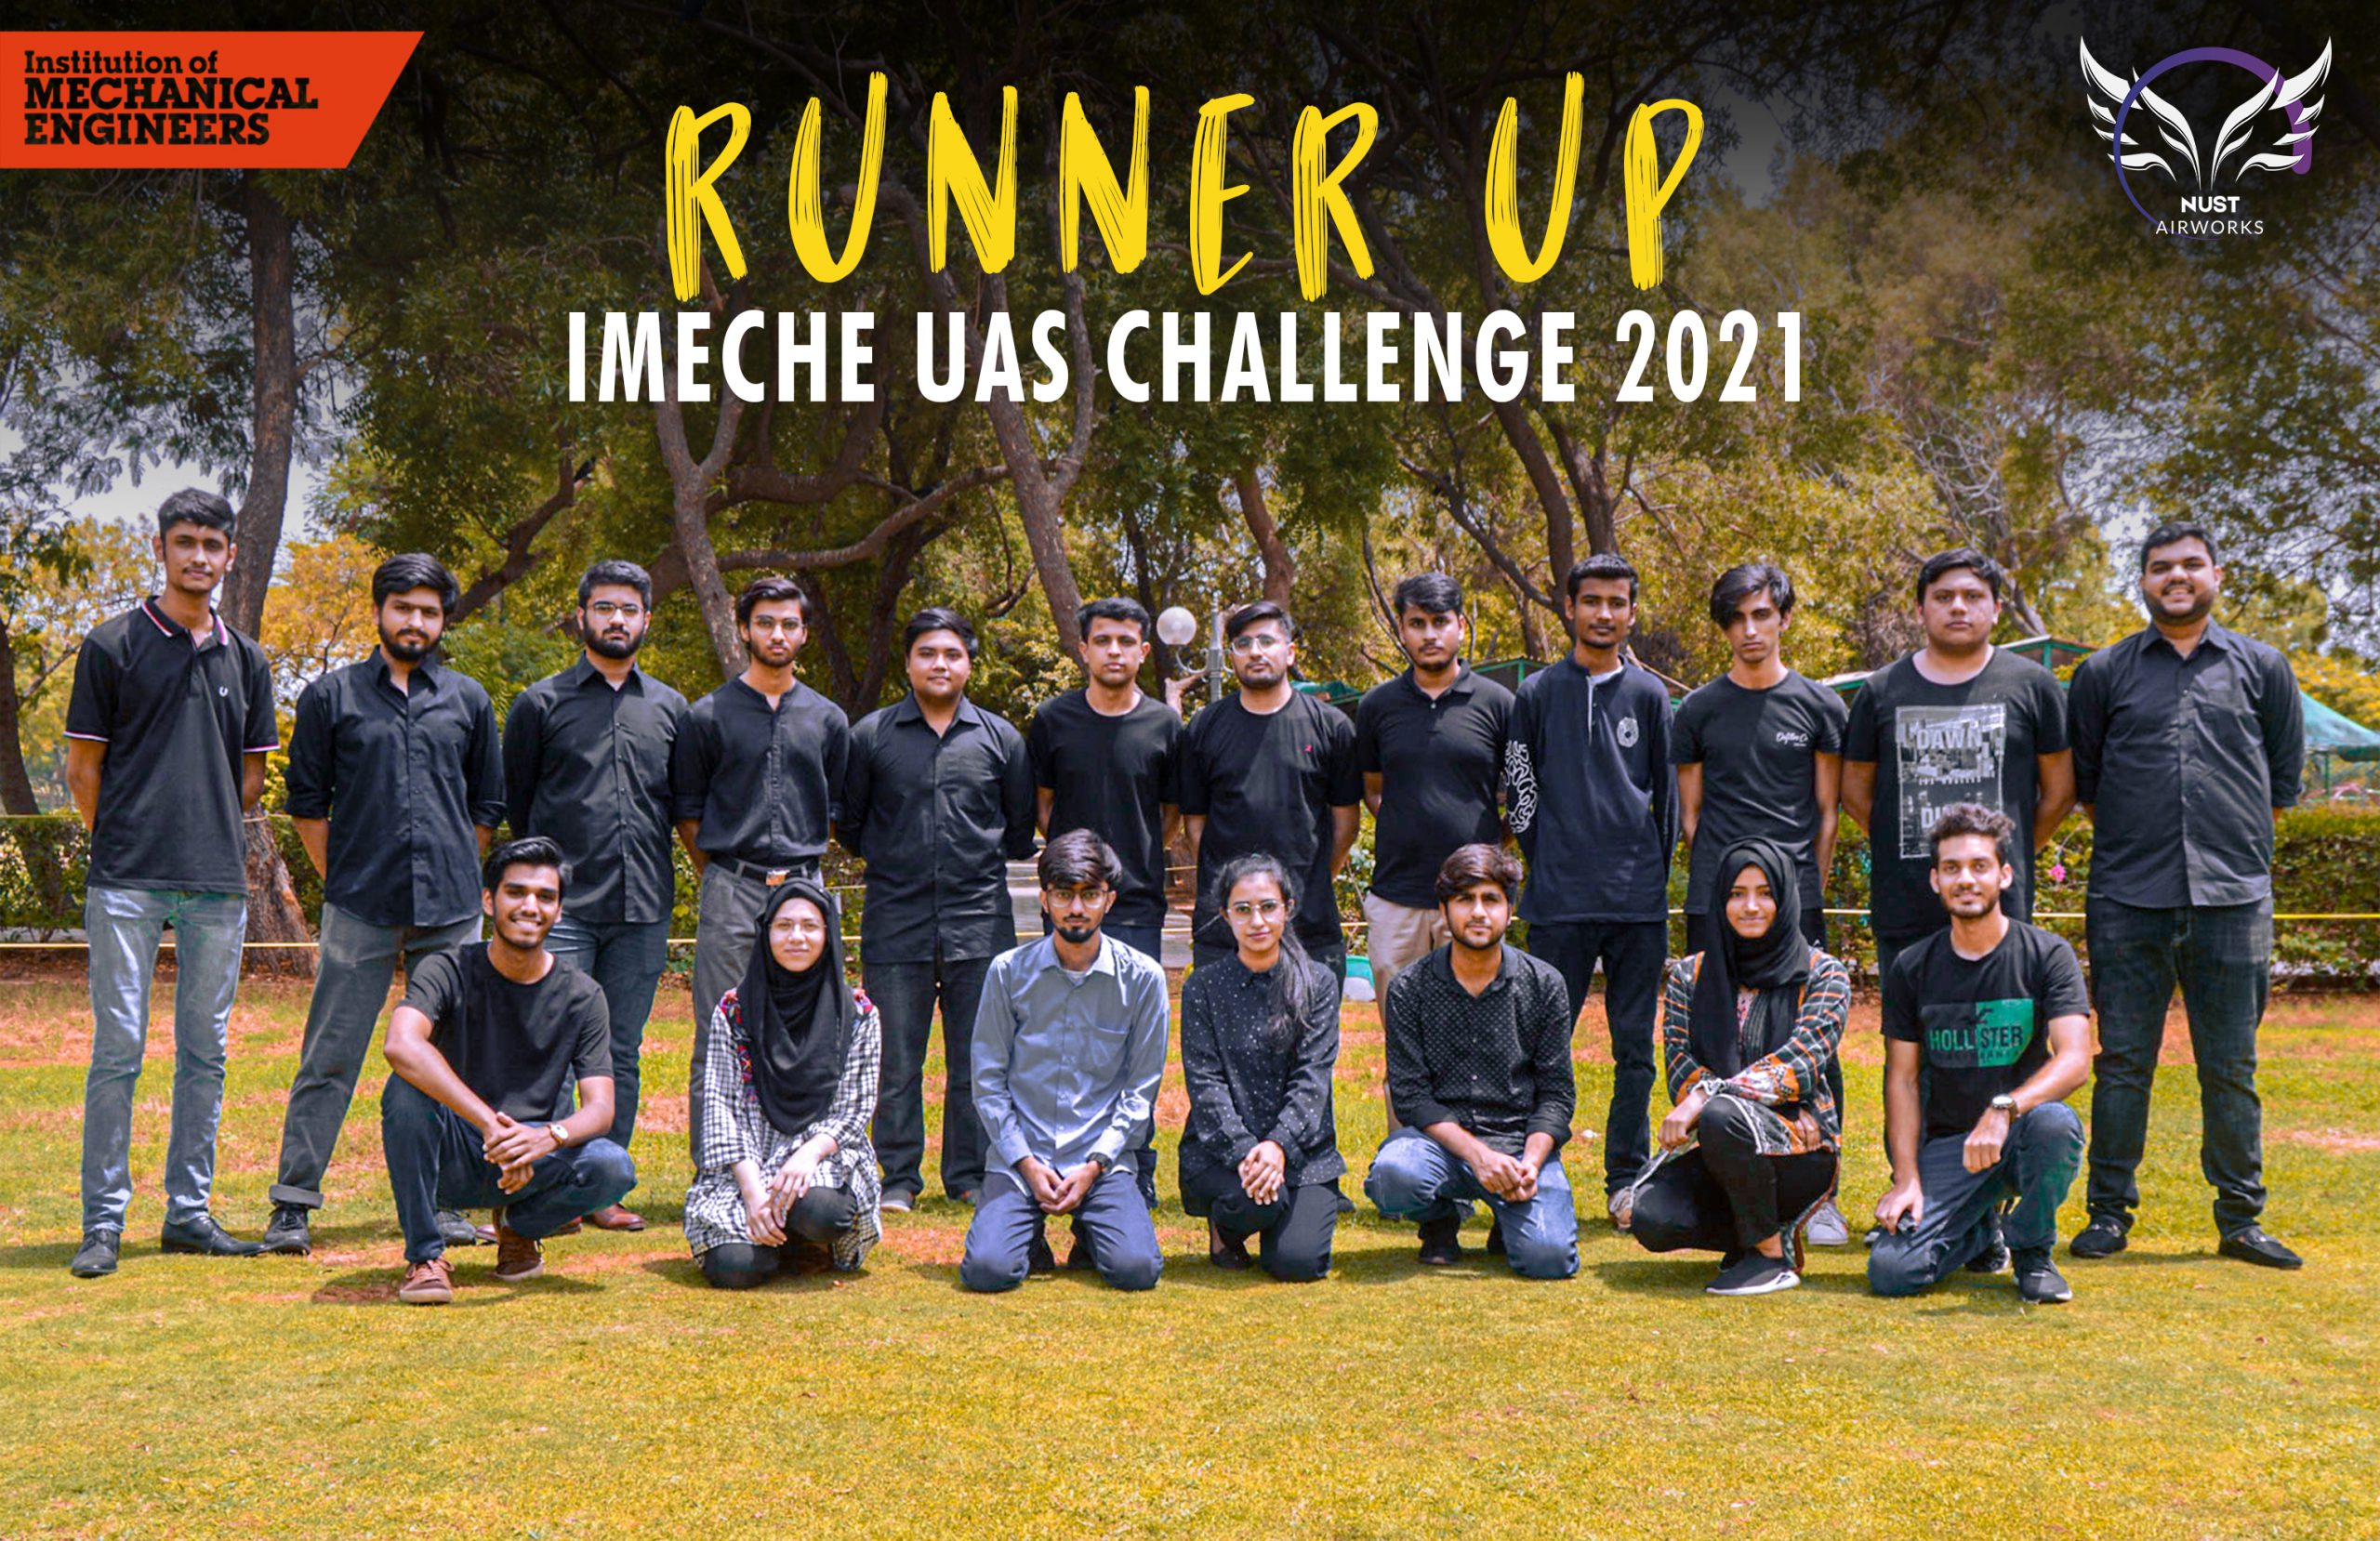 NUST Wins Runner Up Award at U.K’s IMechE UAS Challenge 2021